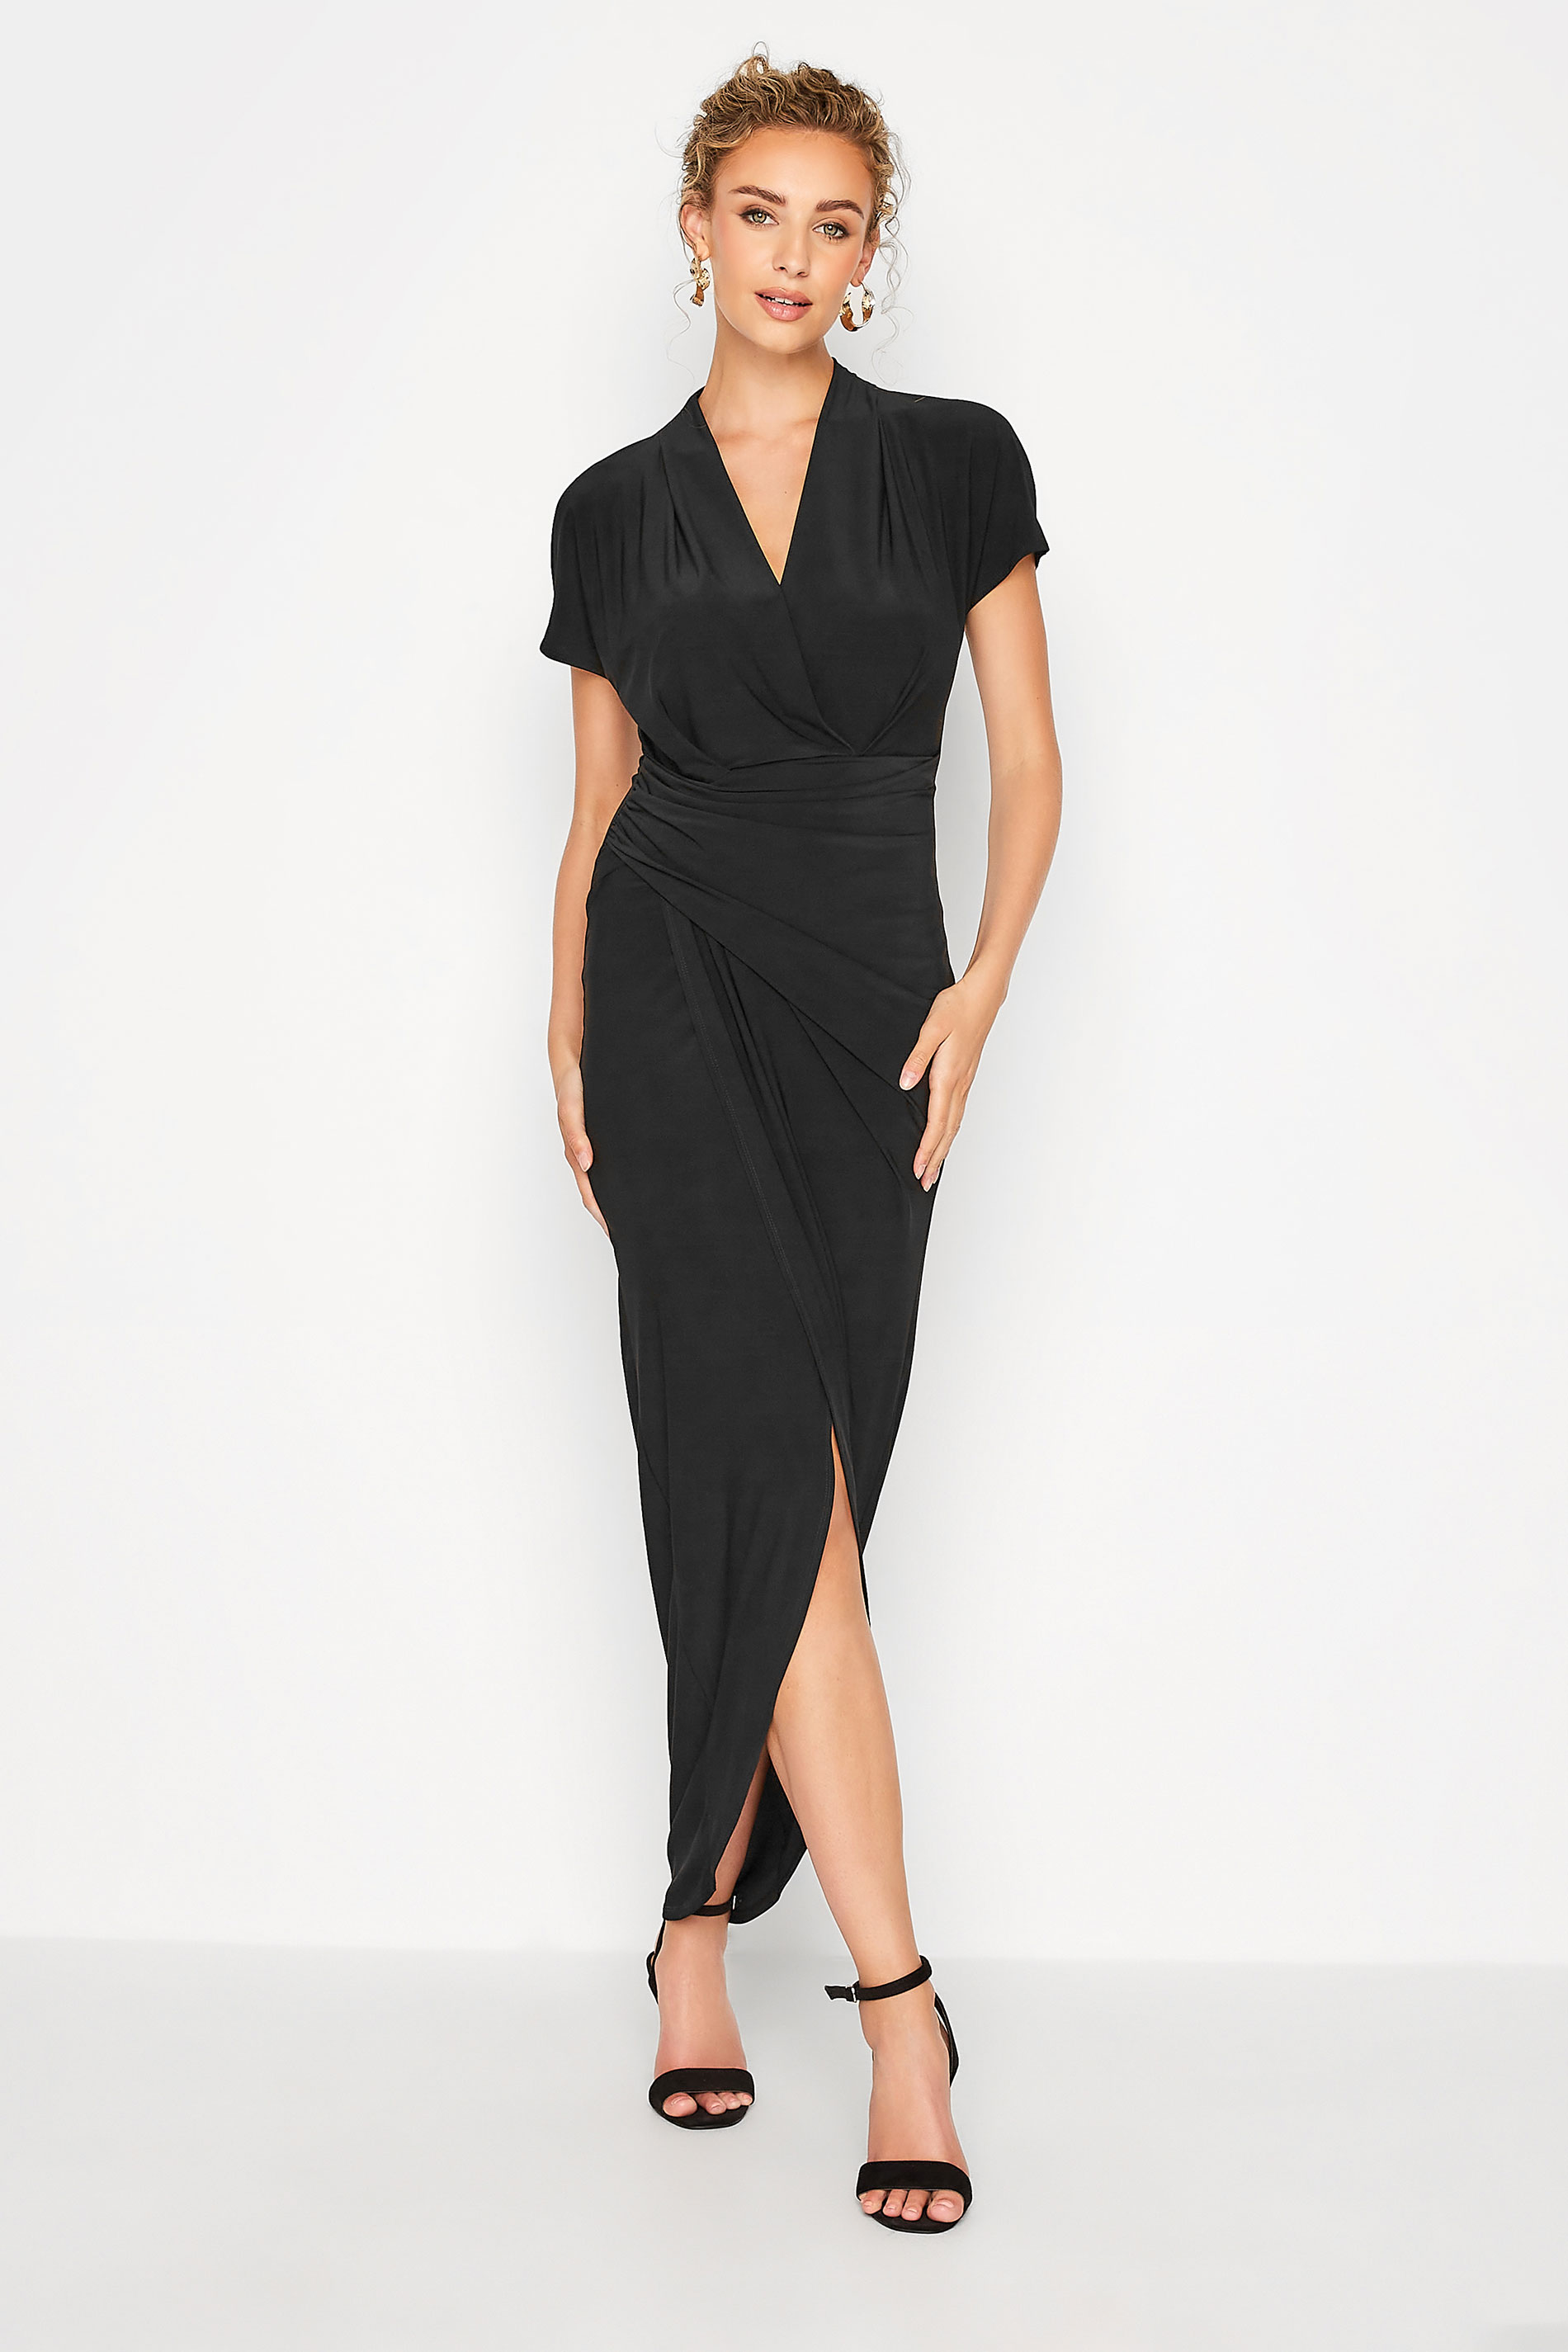 LTS Tall Women's Black Wrap Dress | Long Tall Sally 1